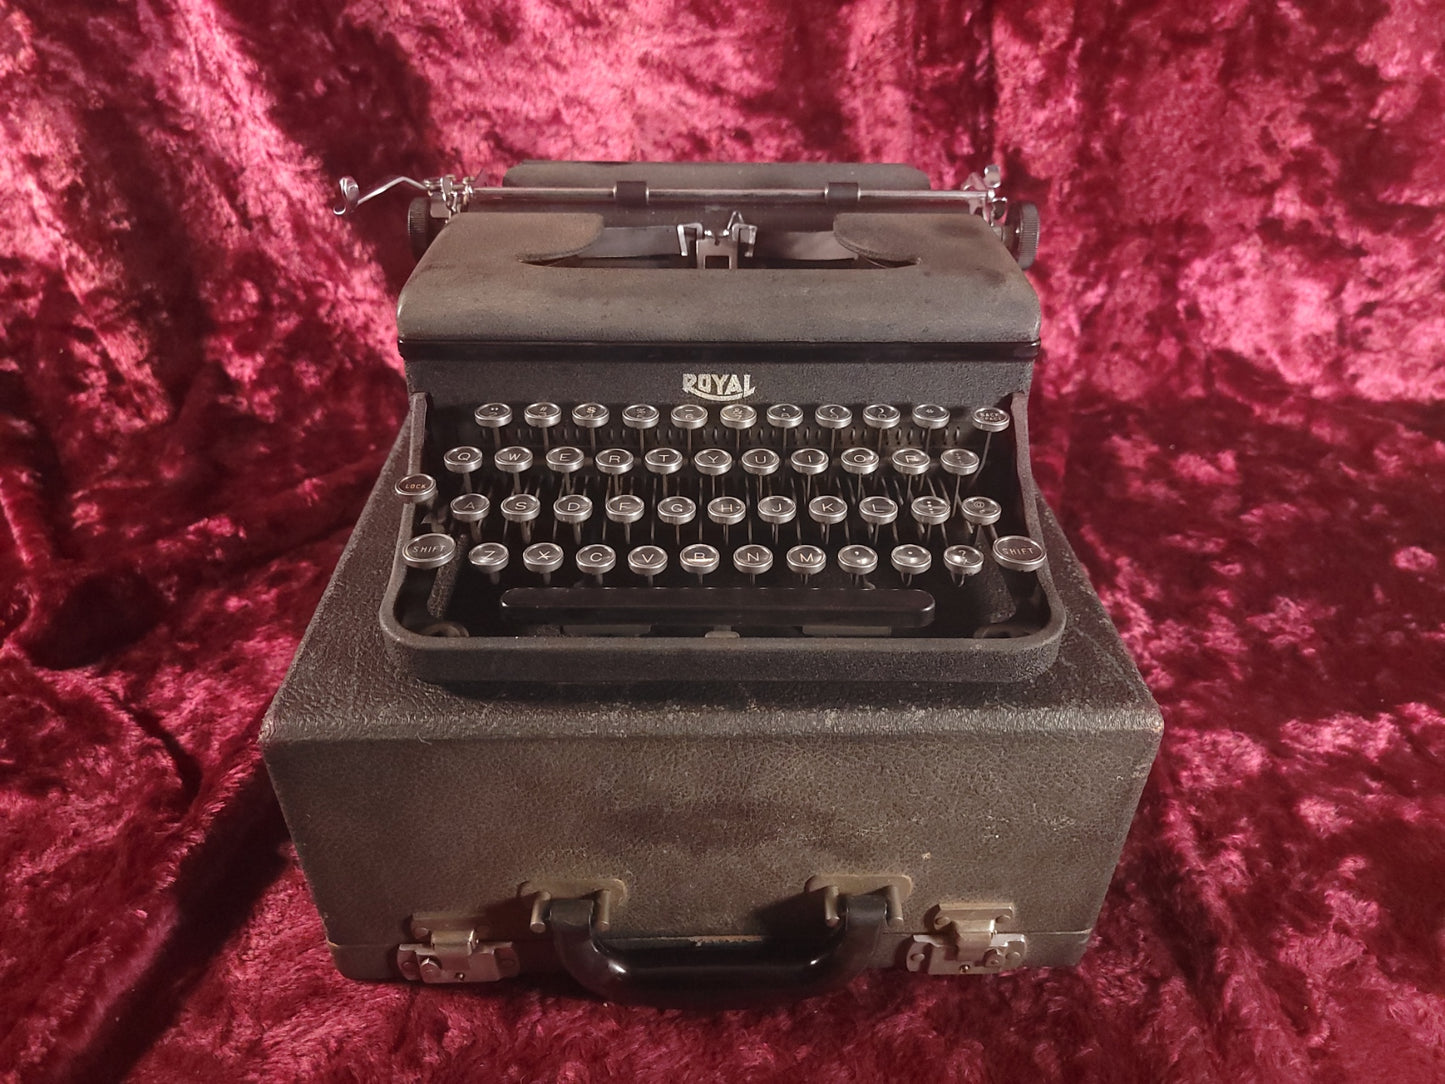 Royal Varsity UB Model Manual Portable Typewriter with Case, 1940